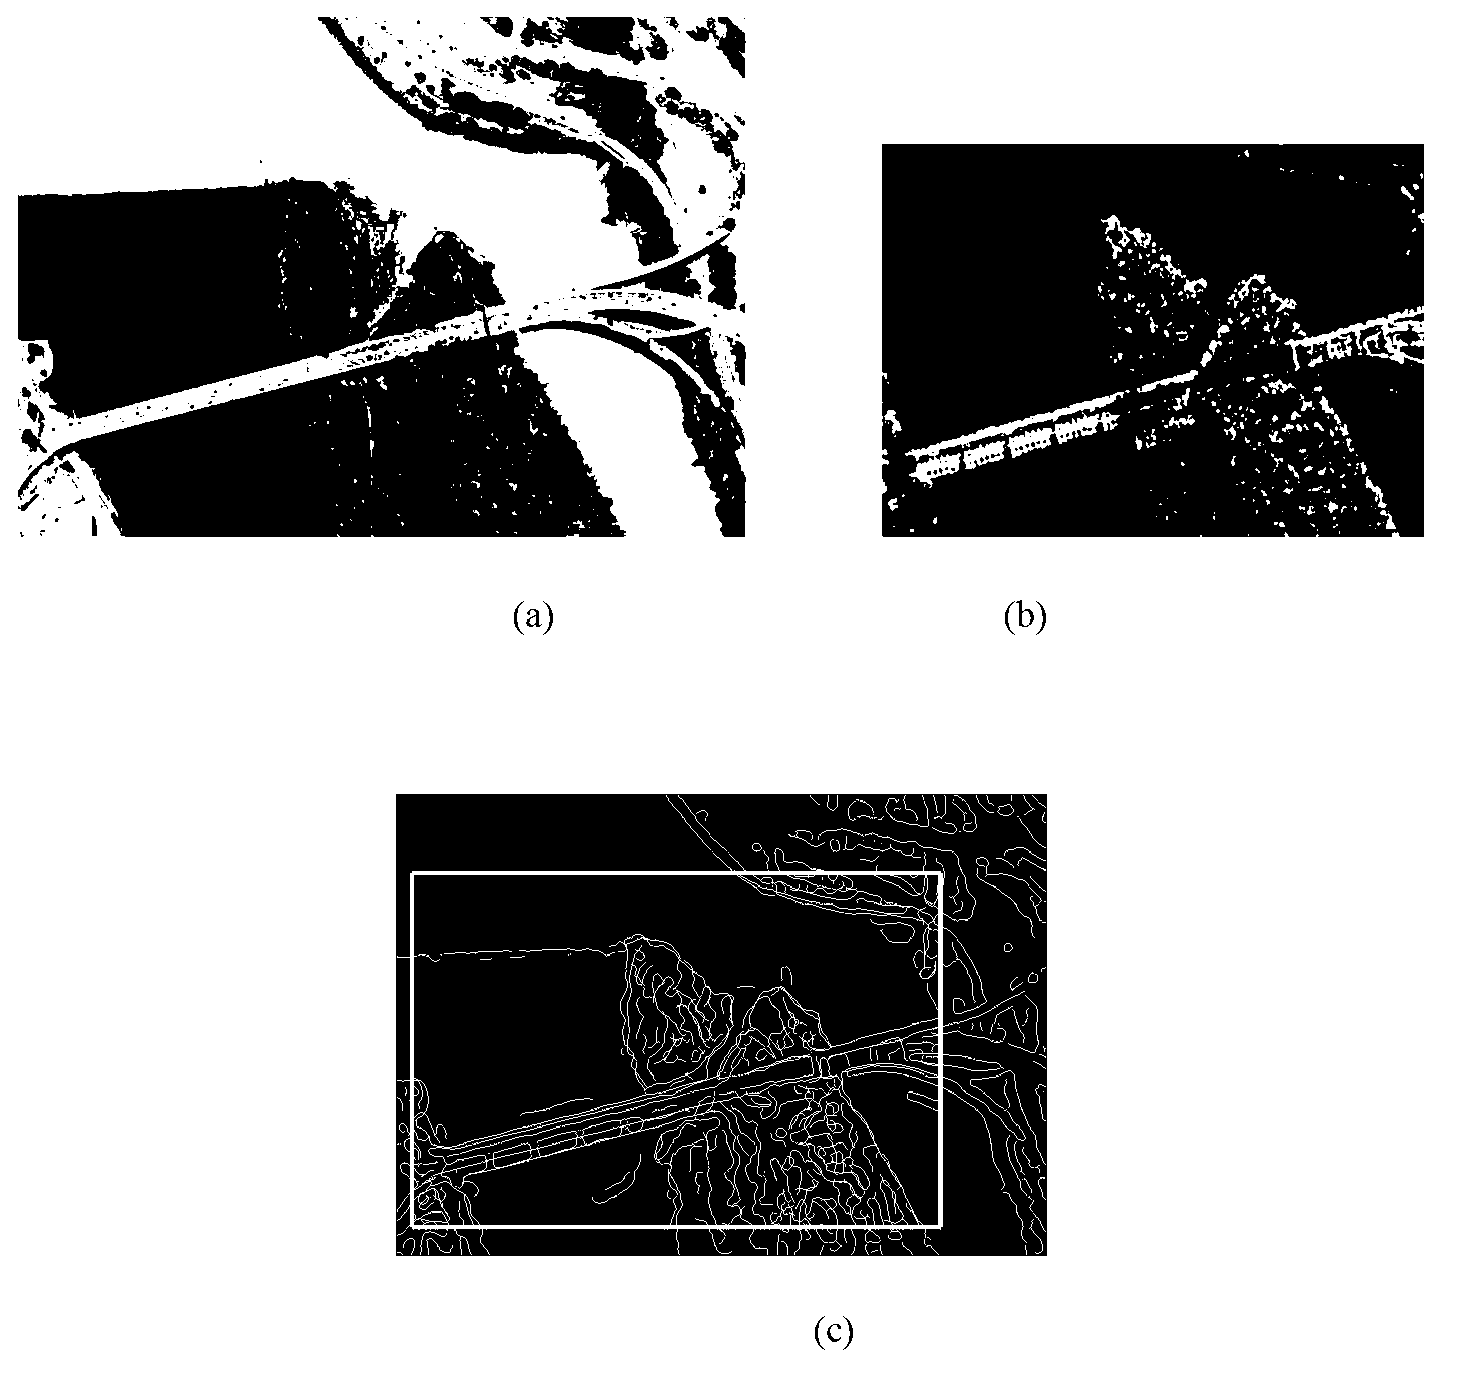 Rapid scene matching method based on SAR (Synthetic Aperture Radar) image